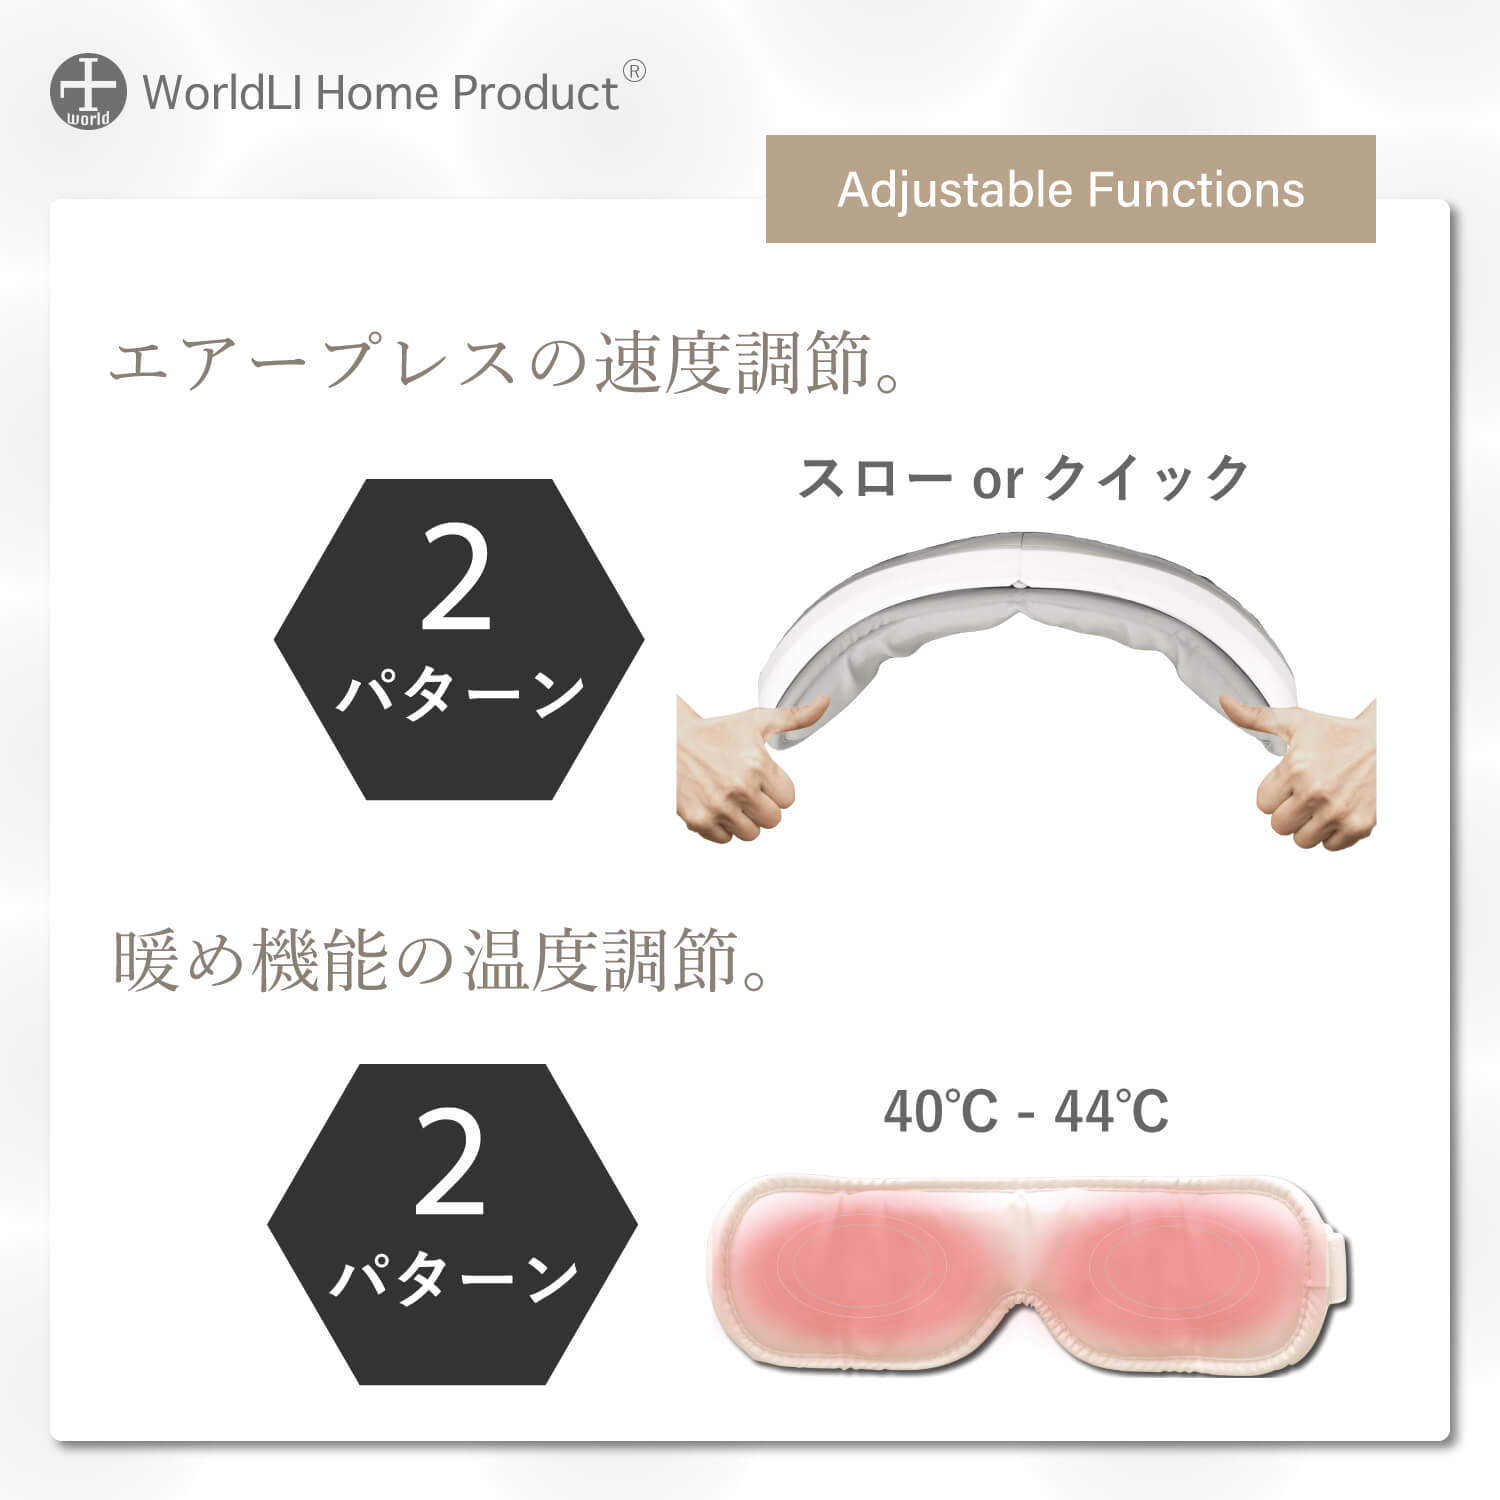 TAK-2 | WorldLI Home Product